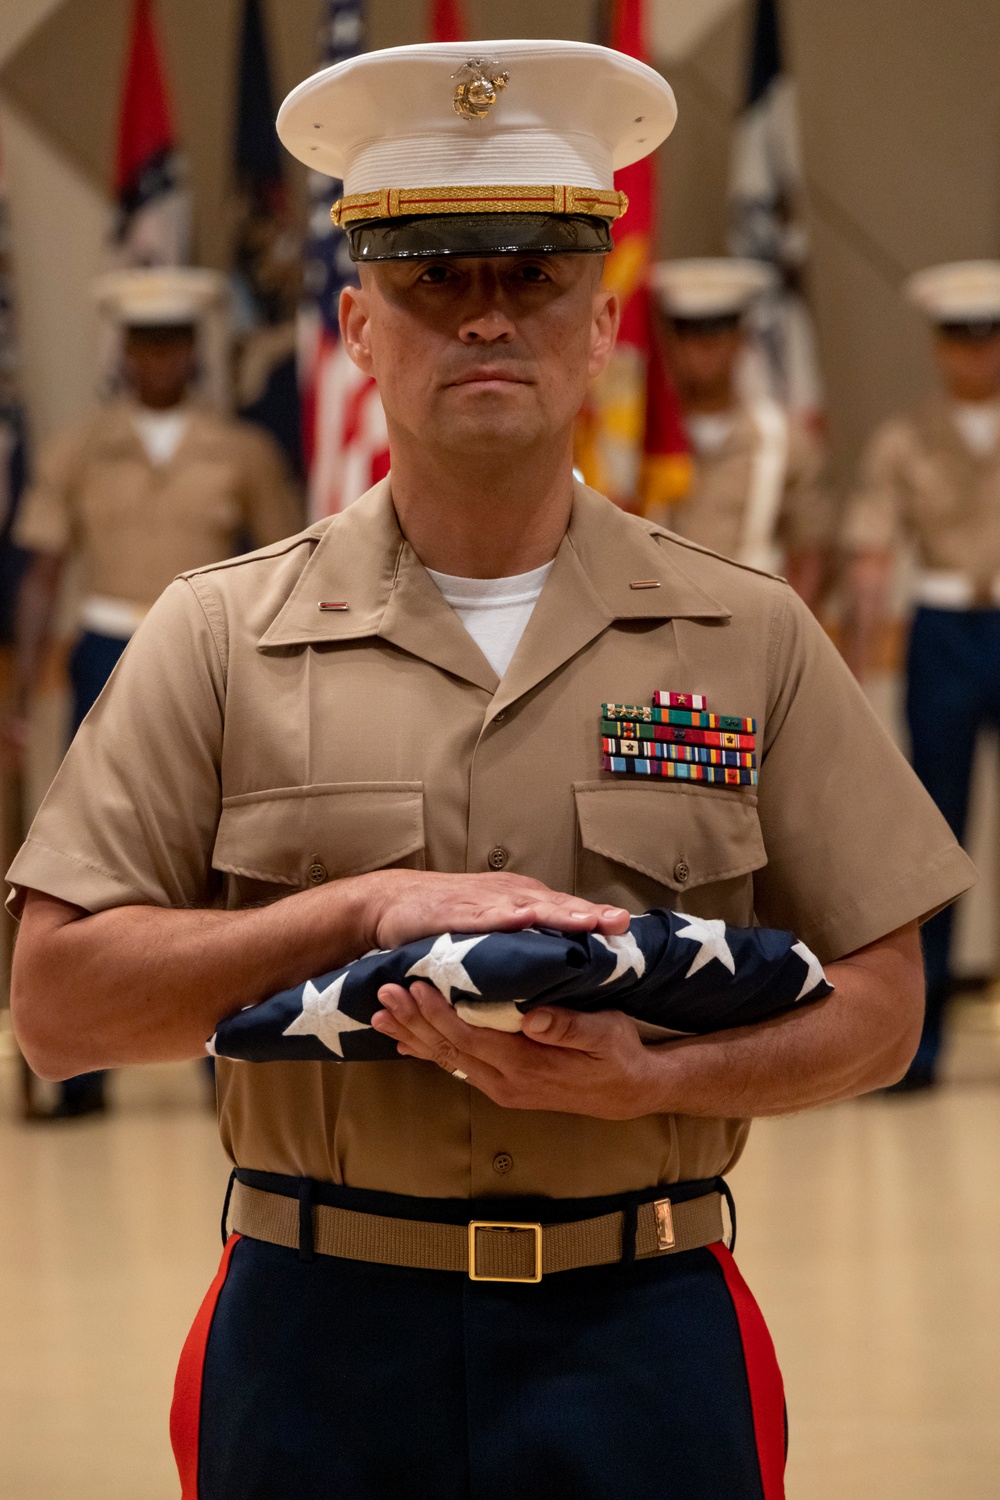 marine warrant officer uniform